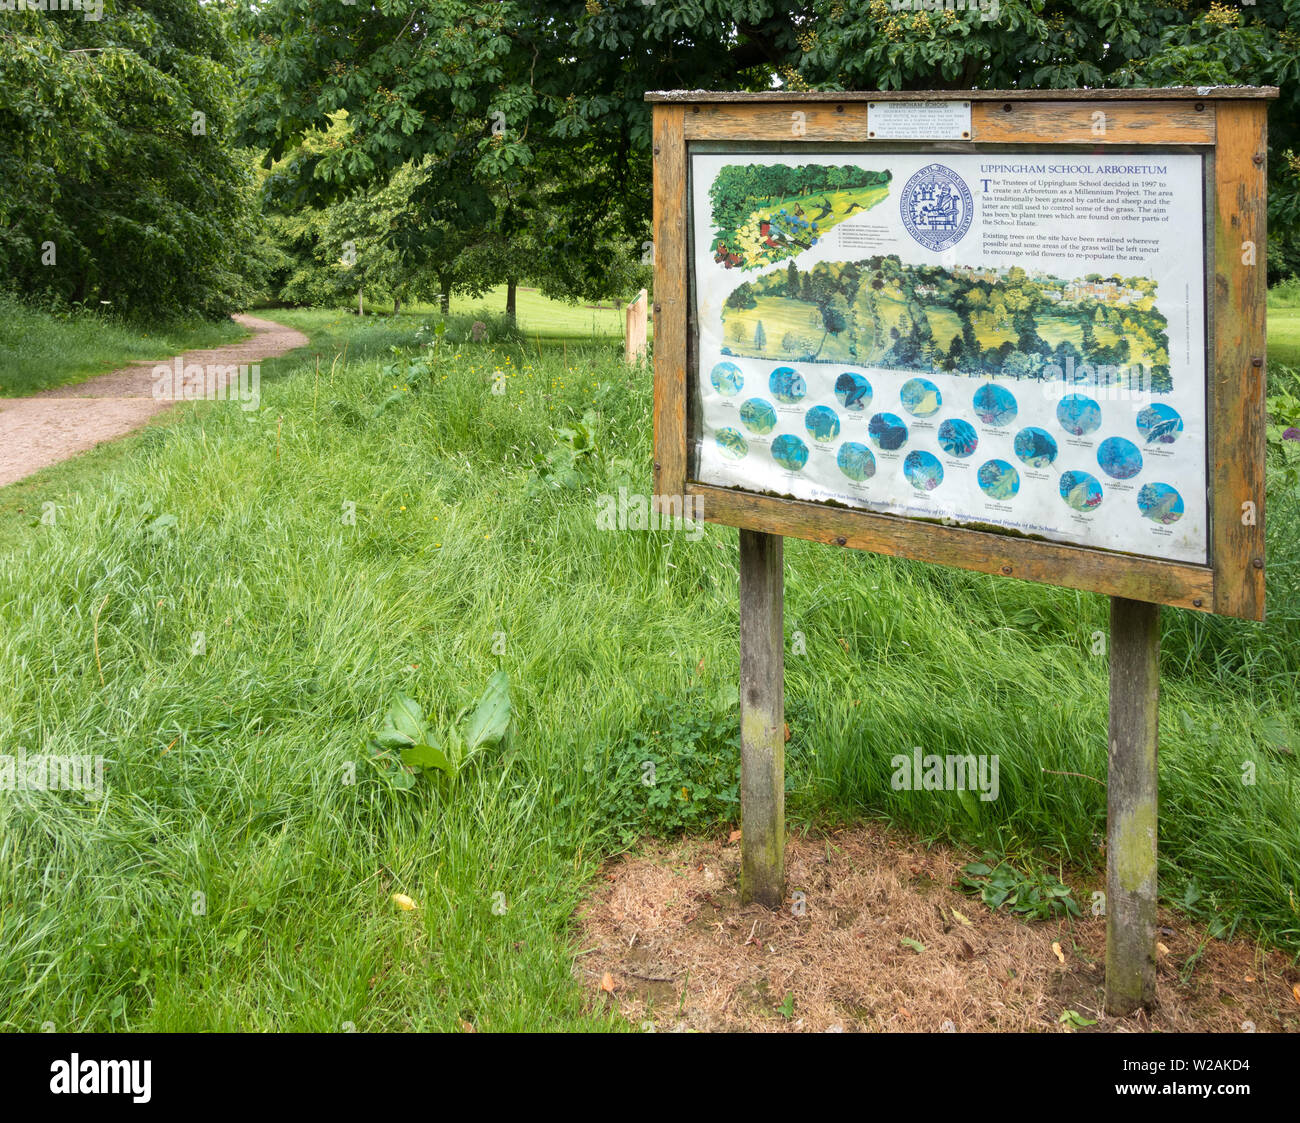 Uppingham School Arboretum d'arbres, d'herbe et de l'information signe, Rutland, England, UK Banque D'Images